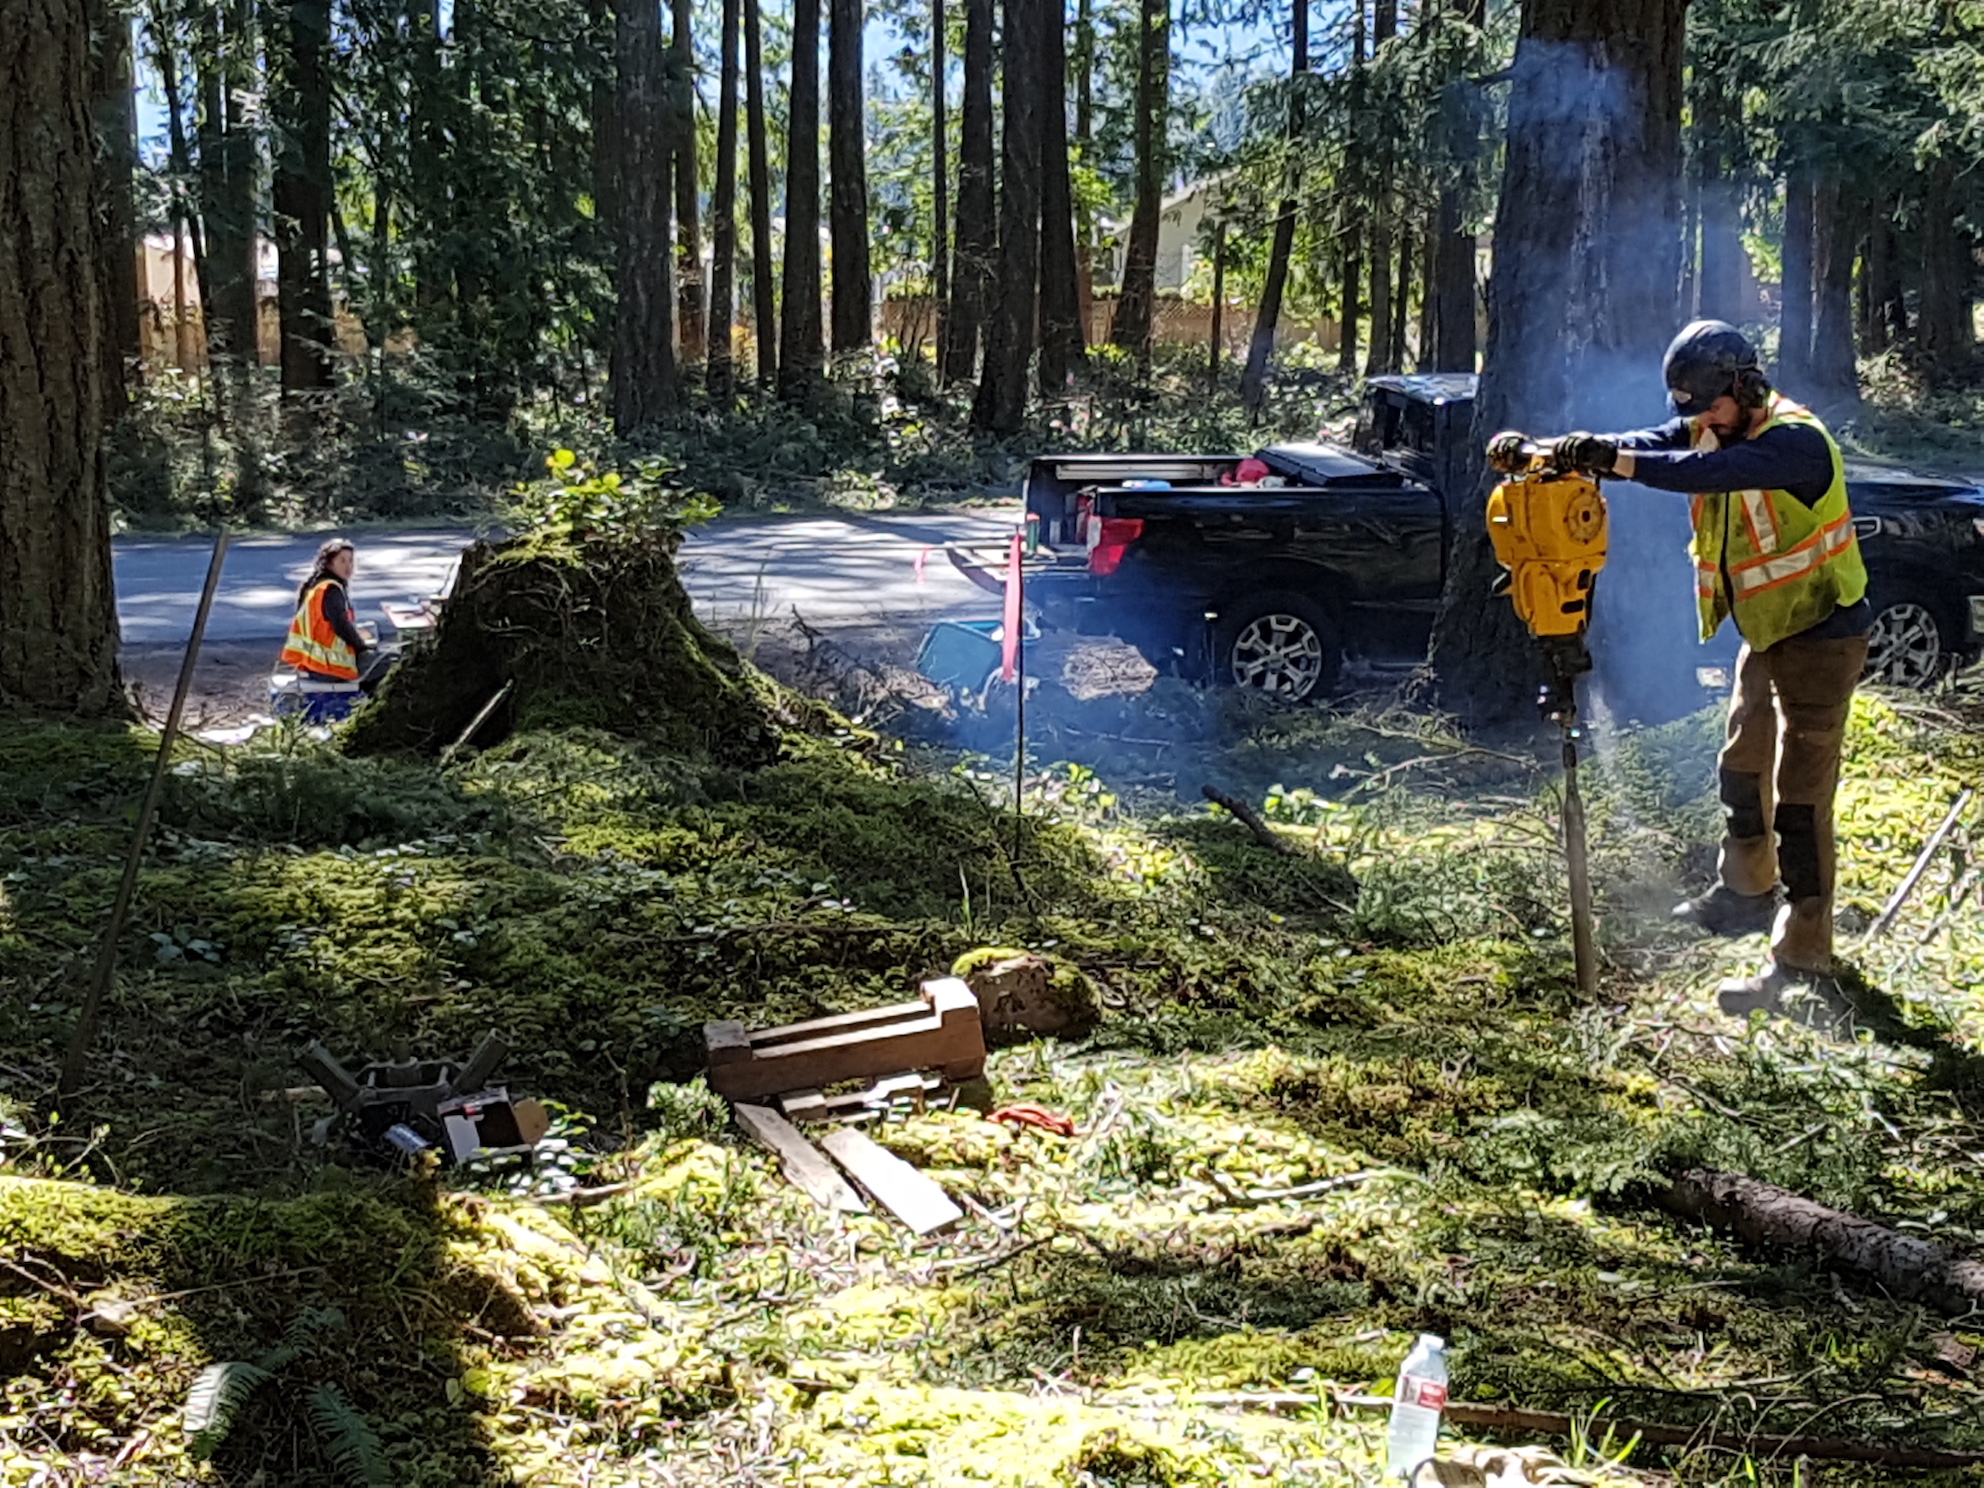 Sampling in woods near prison near Nanaimo